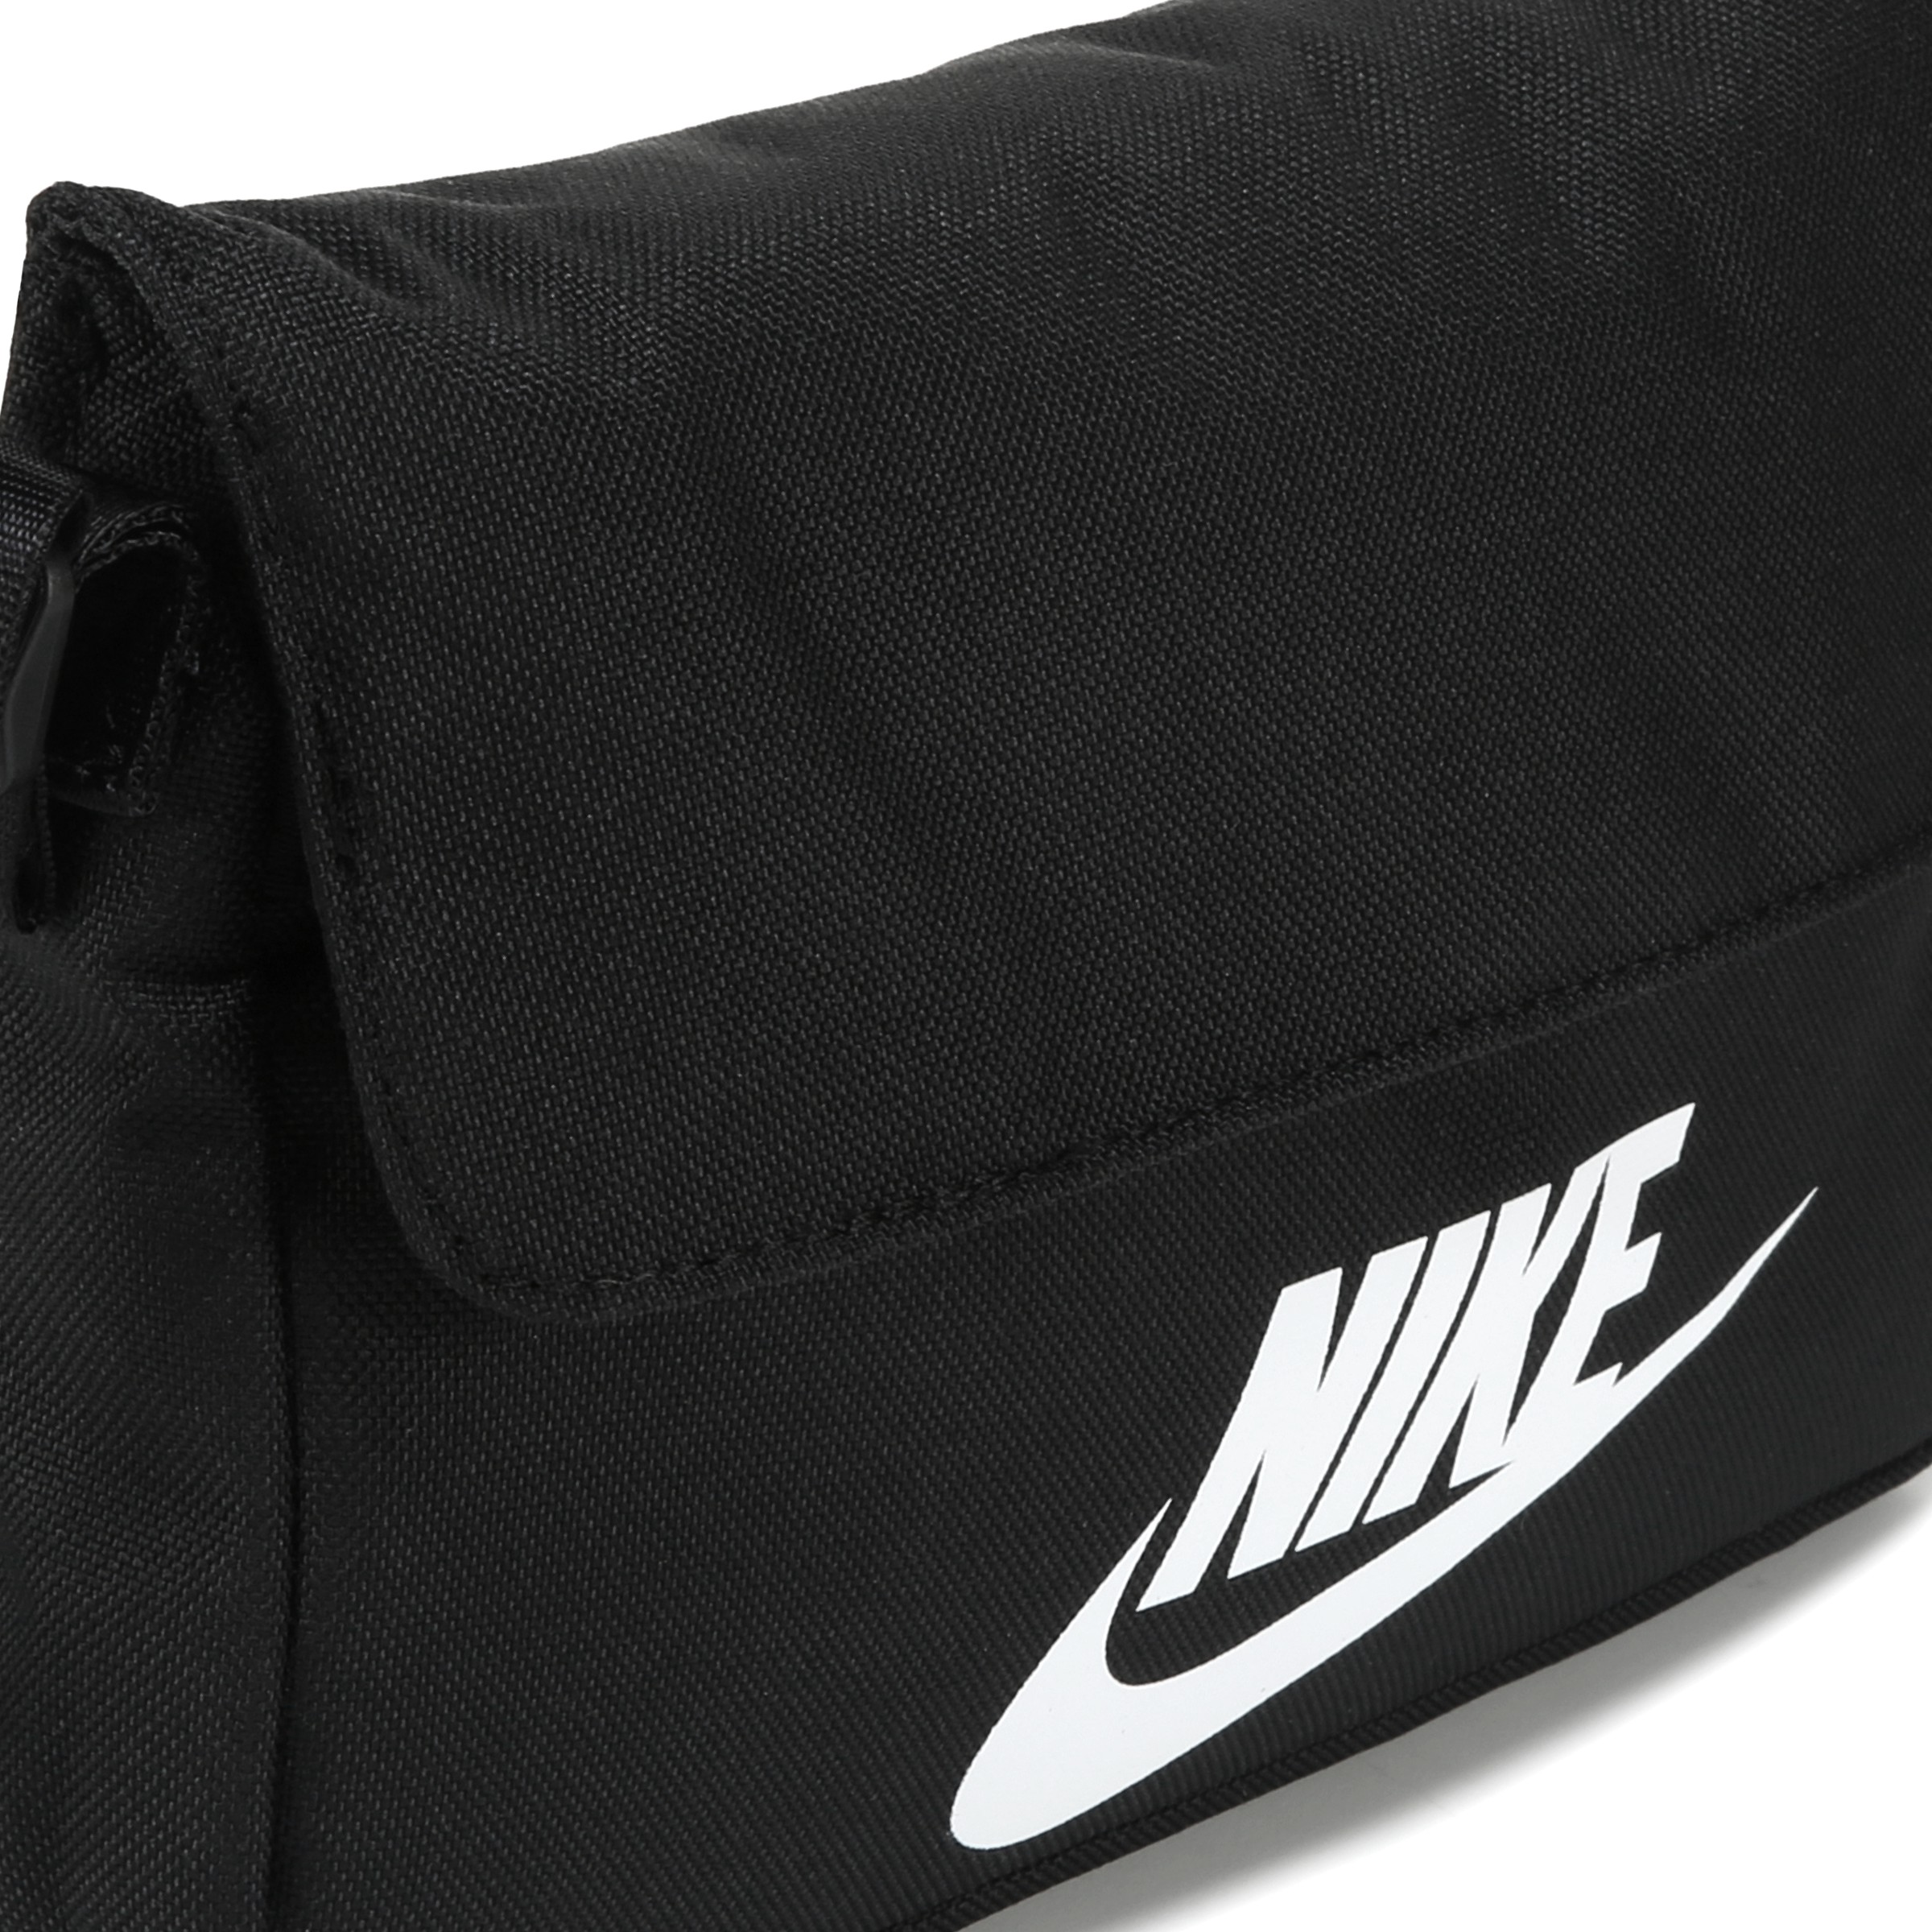 Nike Sportswear Futura 365 Women's Cross-Body Bag